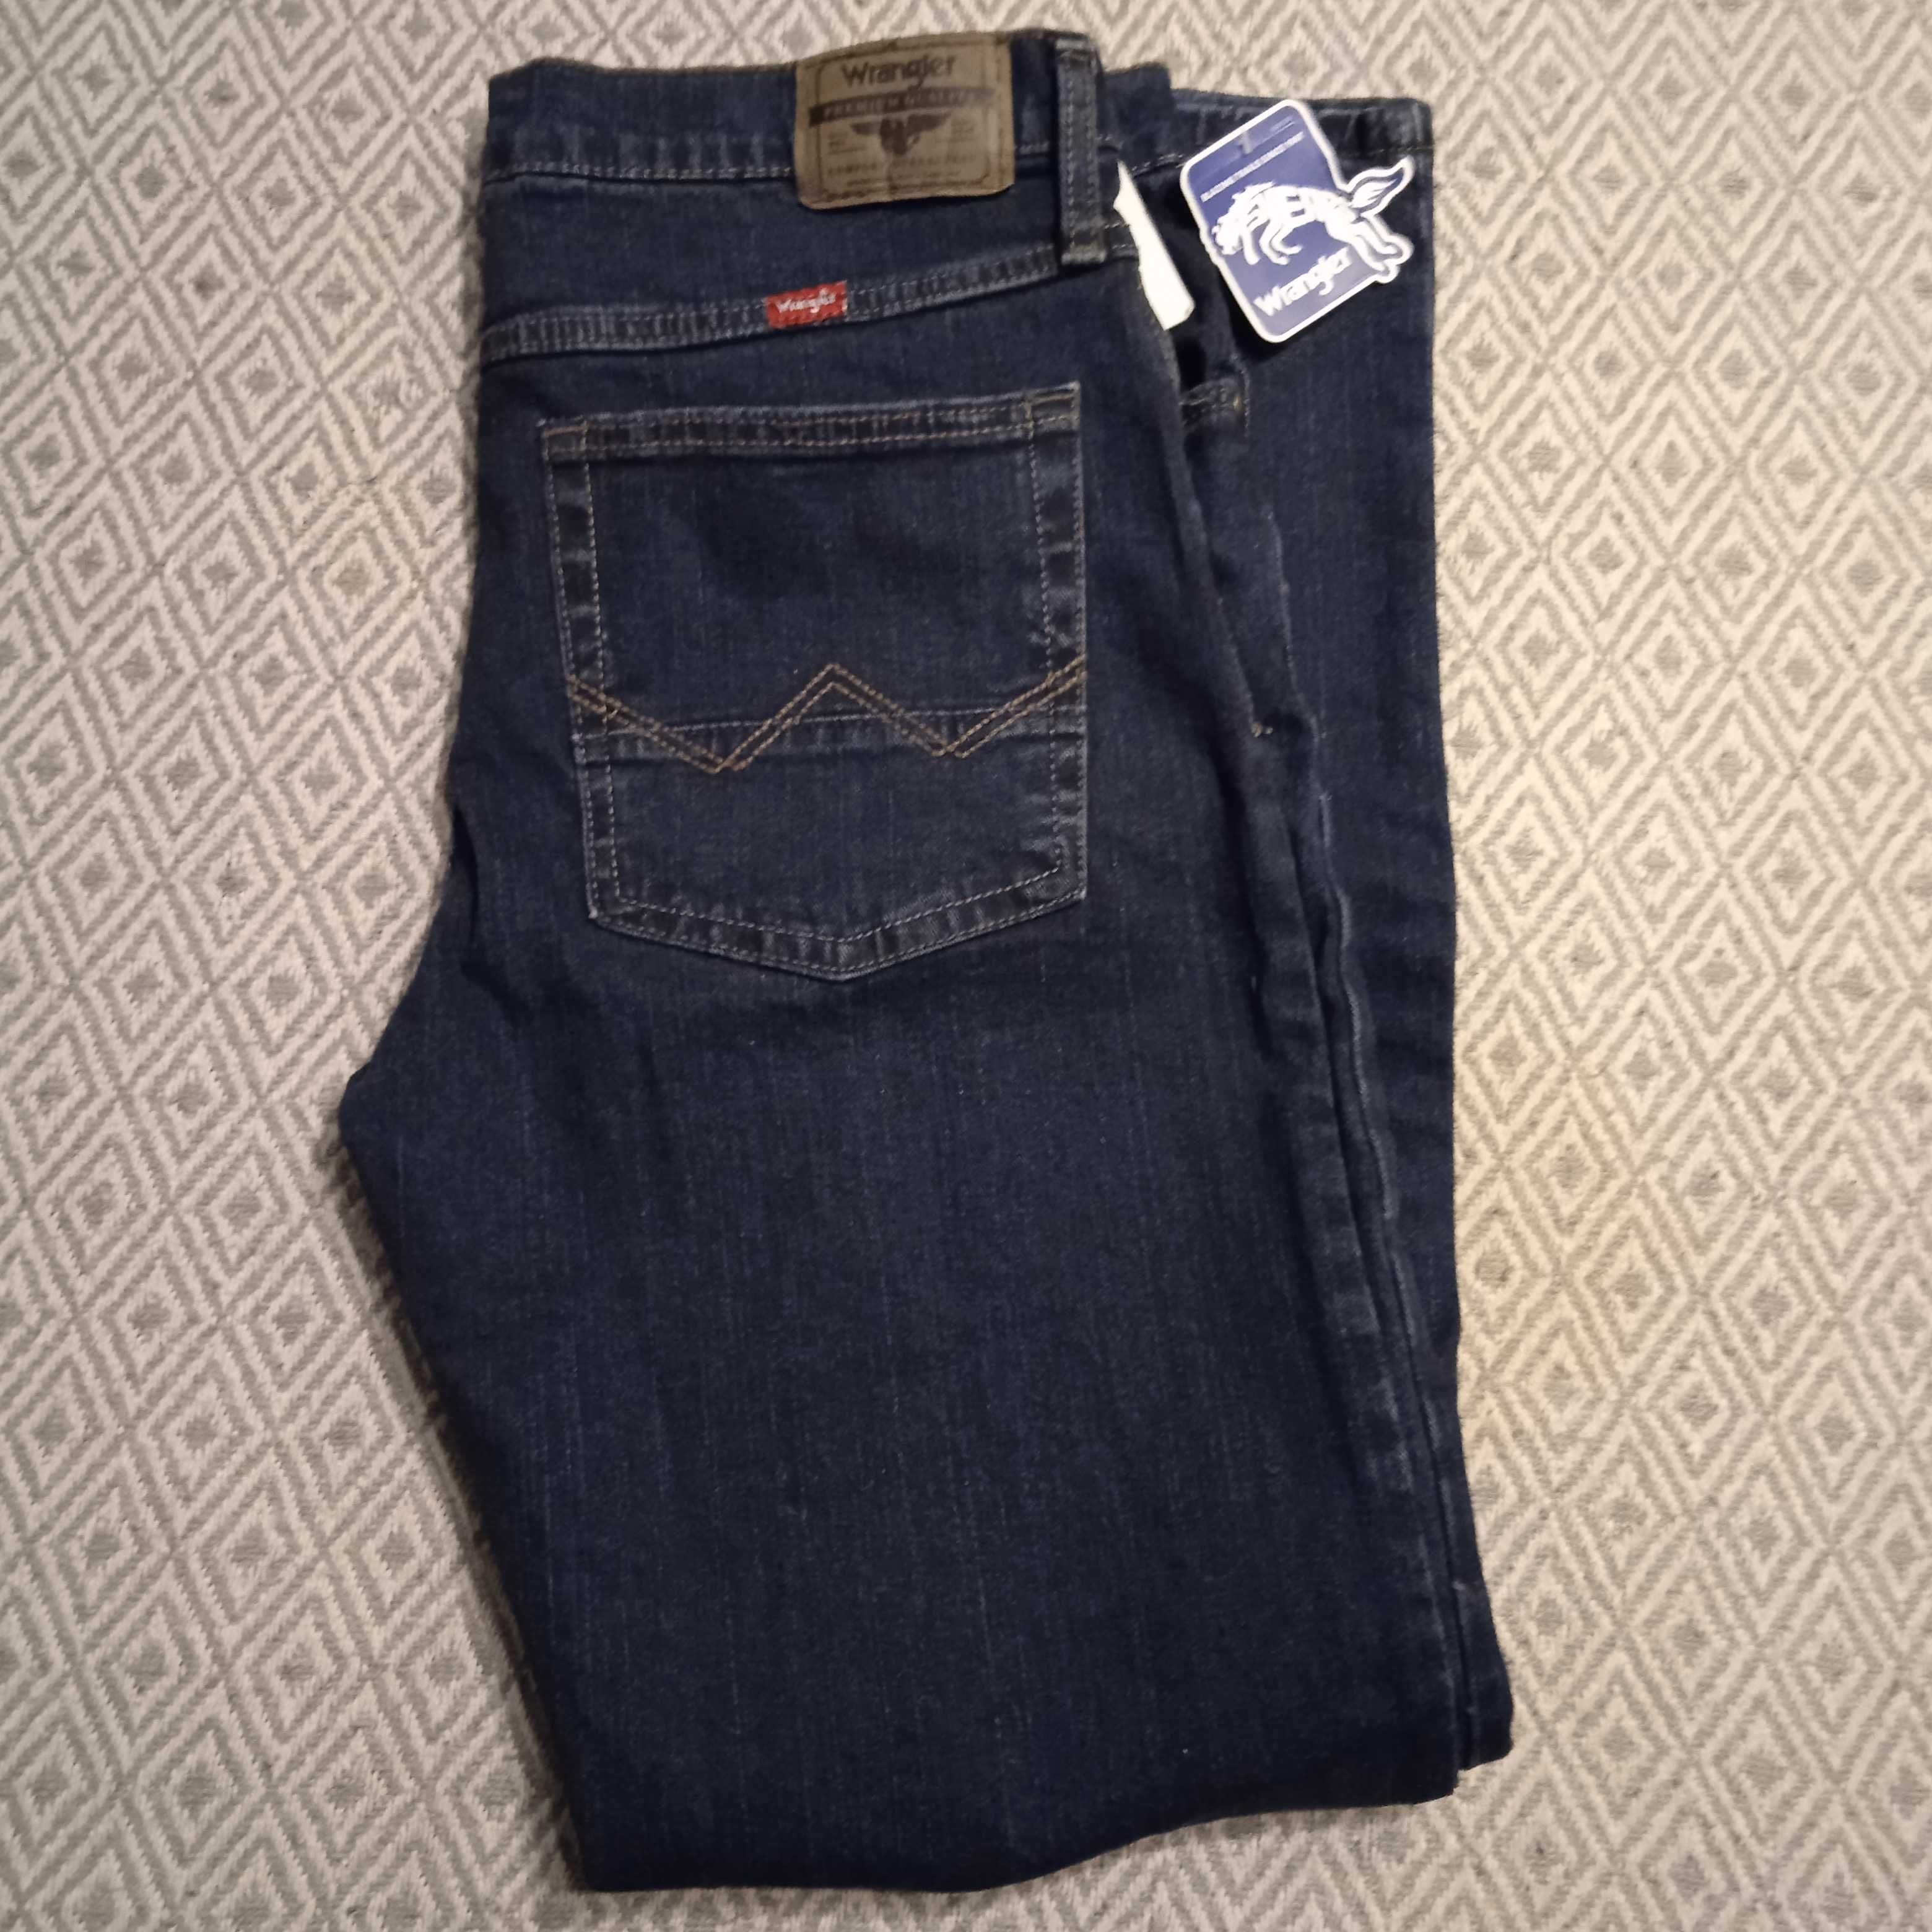 Wrangle Slim Straight spodnie jeansy W32 L32 Super Cena! Sold!